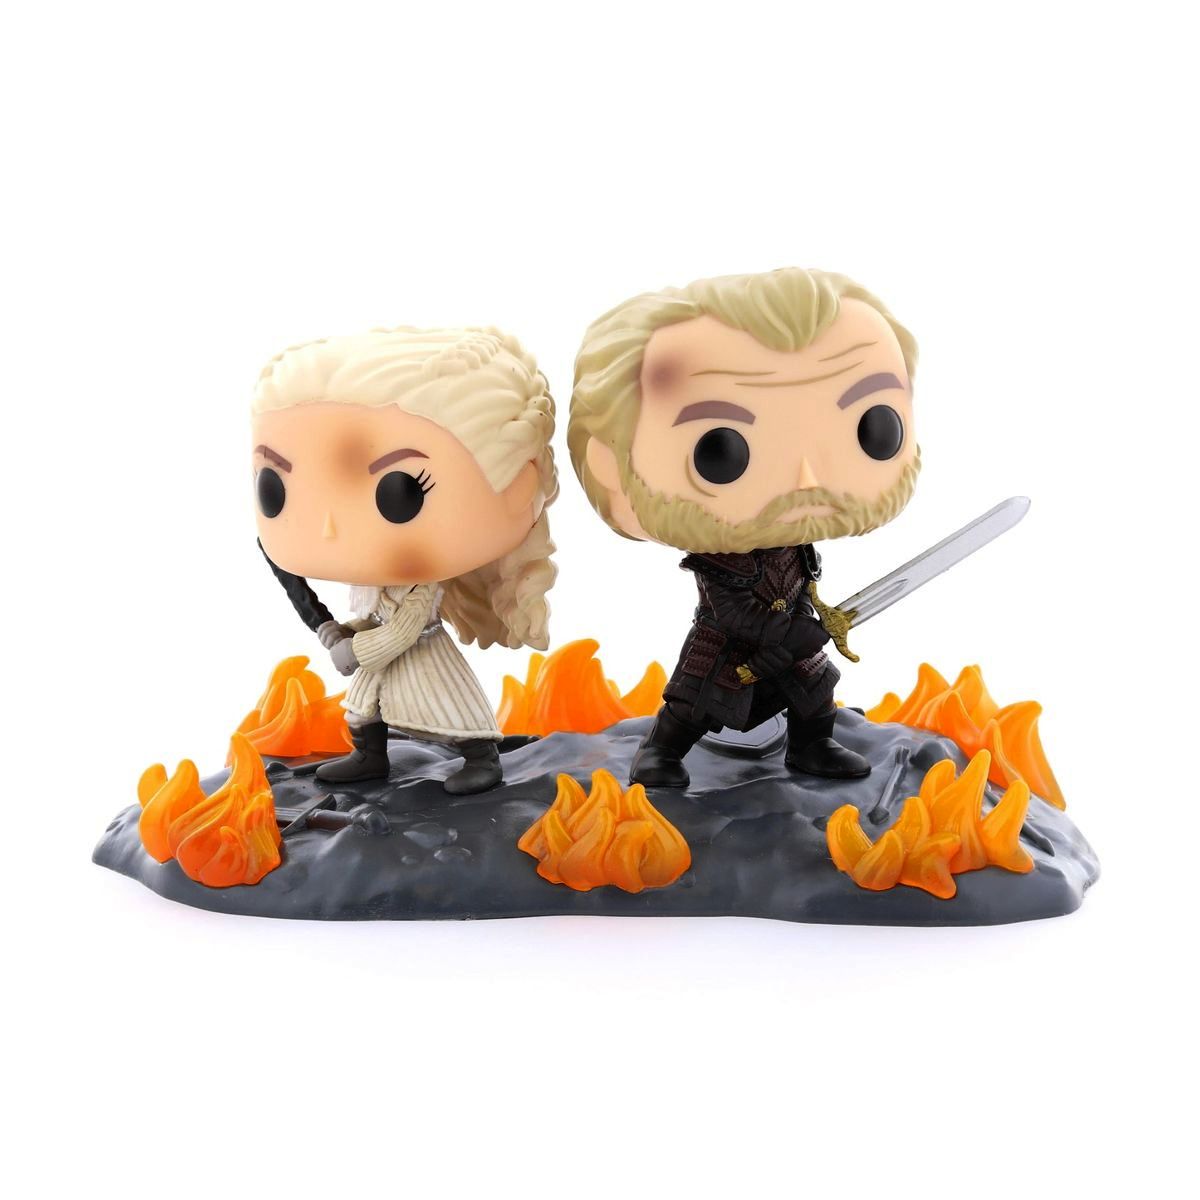 Funko Pop Moment Game of Thrones Daenerys & Jorah B2B with Swords Vinyl Figure